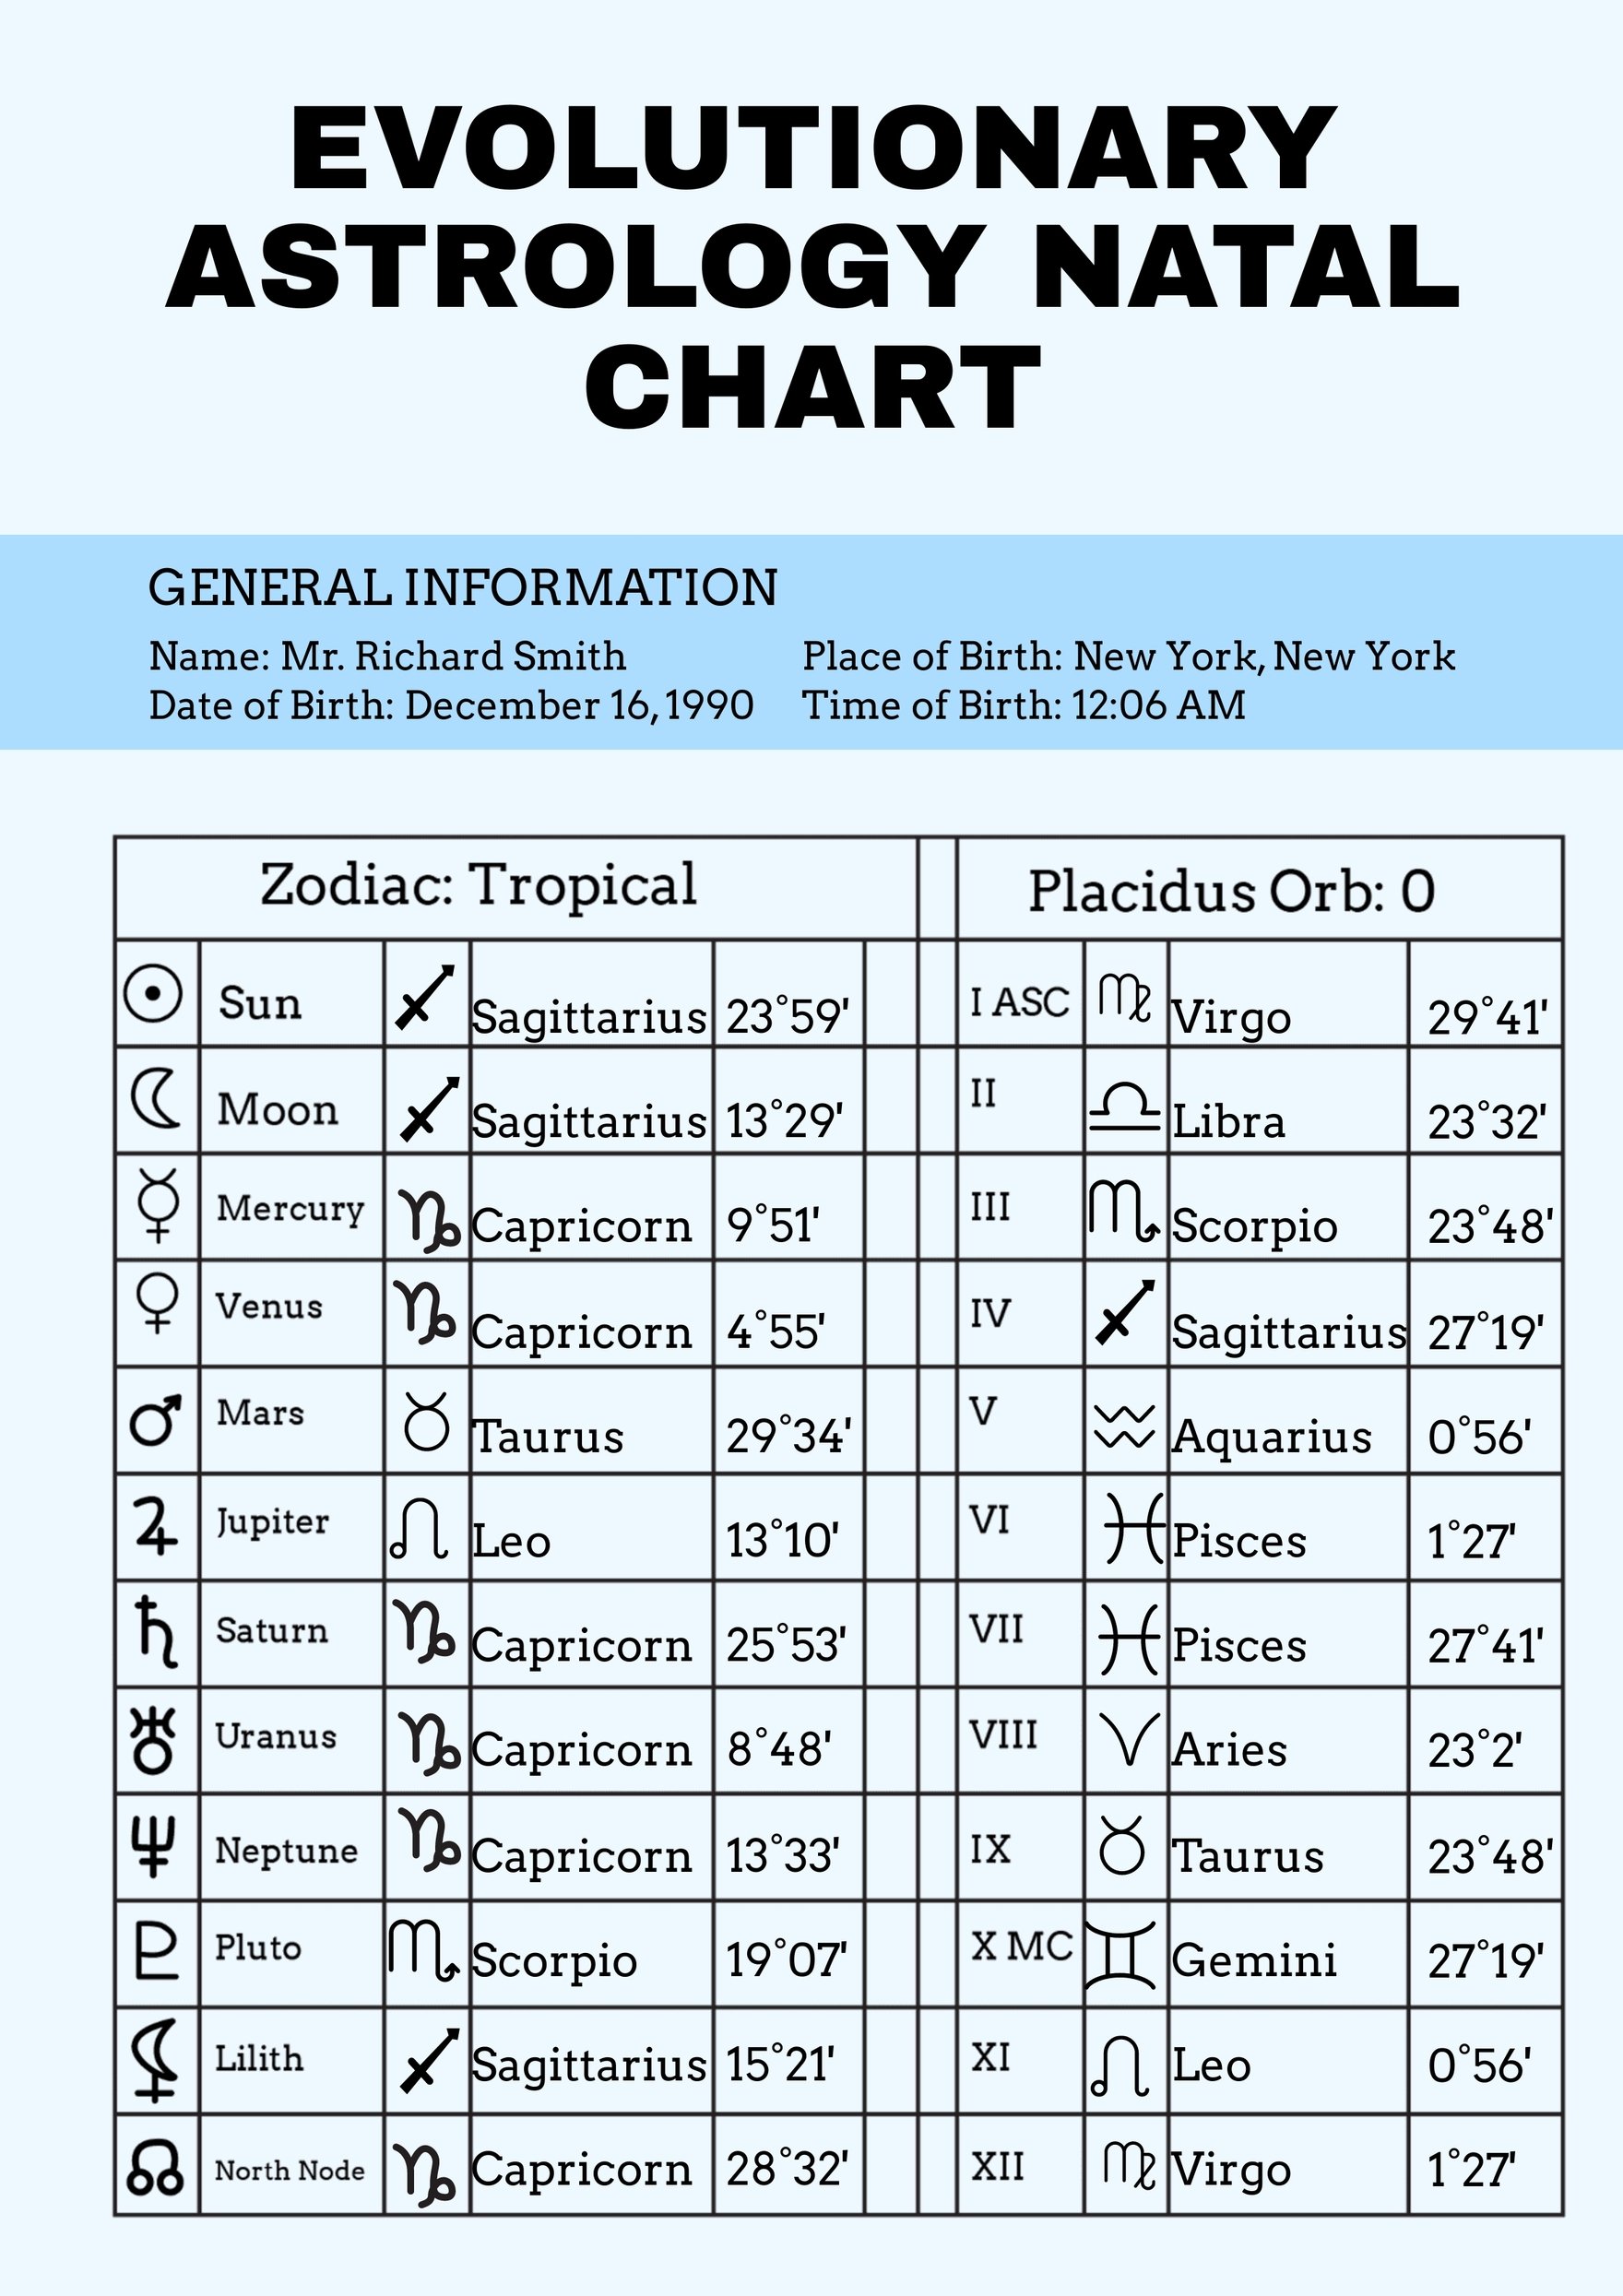 Evolutionary Astrology Natal Chart Template in PDF, Illustrator